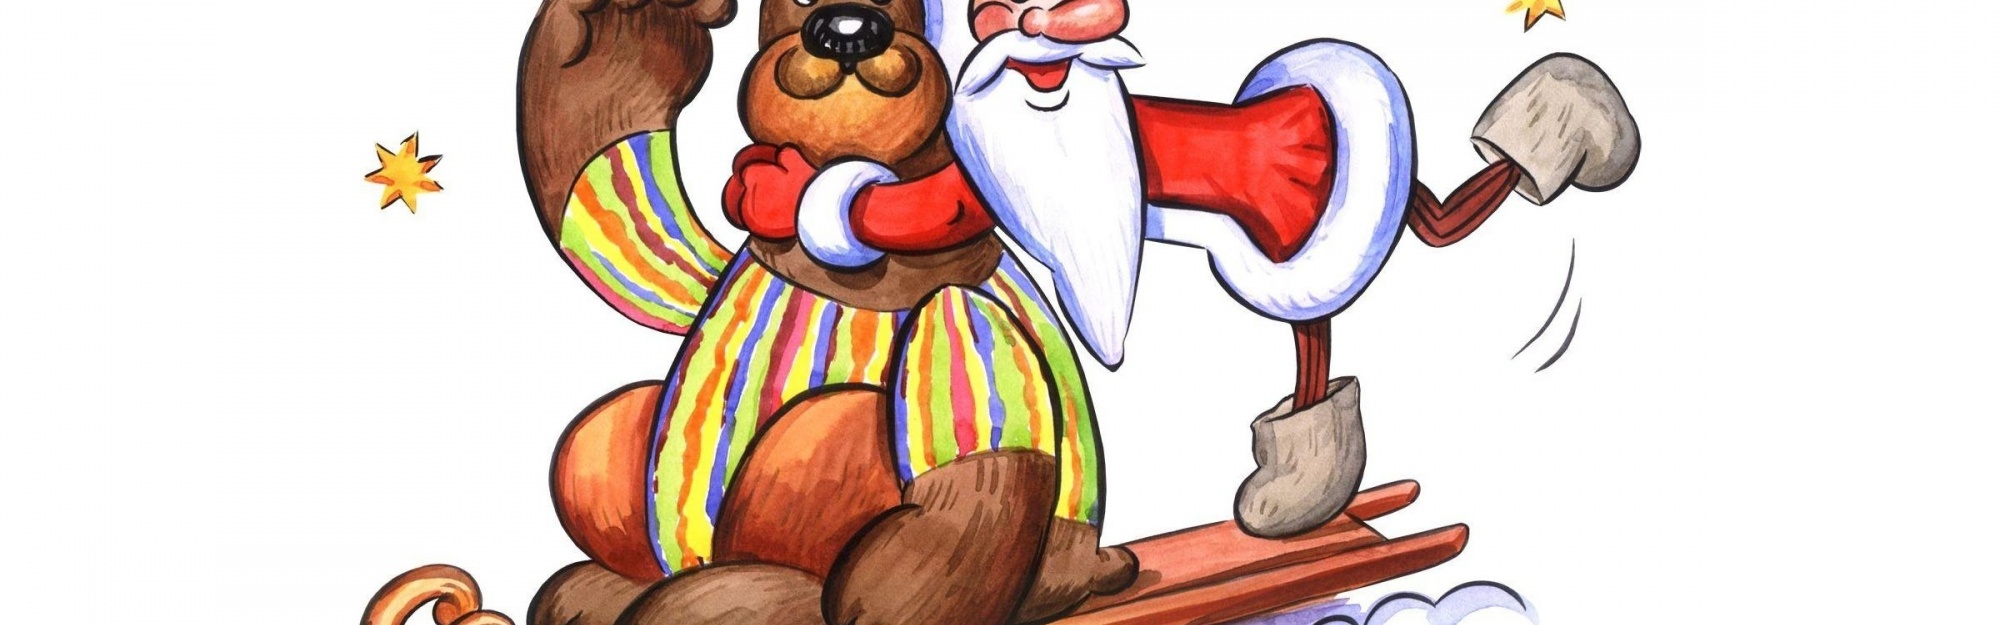 Bear Santa Claus Greeting Card Star